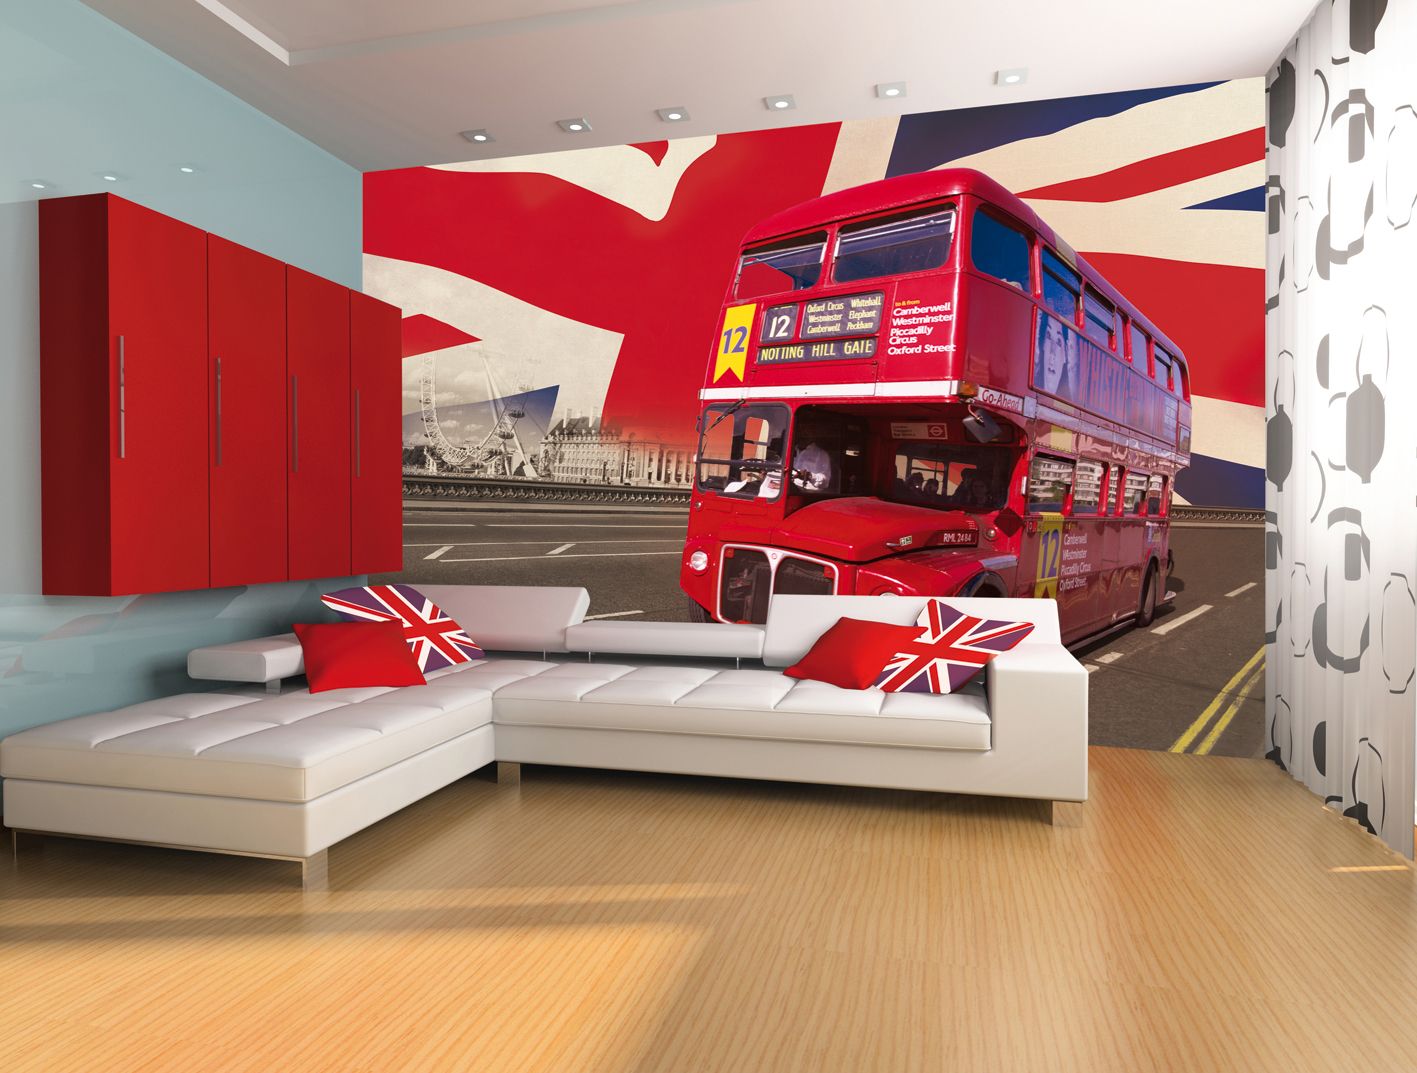 Giant Wallpaper Wall Mural London Bus Union Jack Theme Design